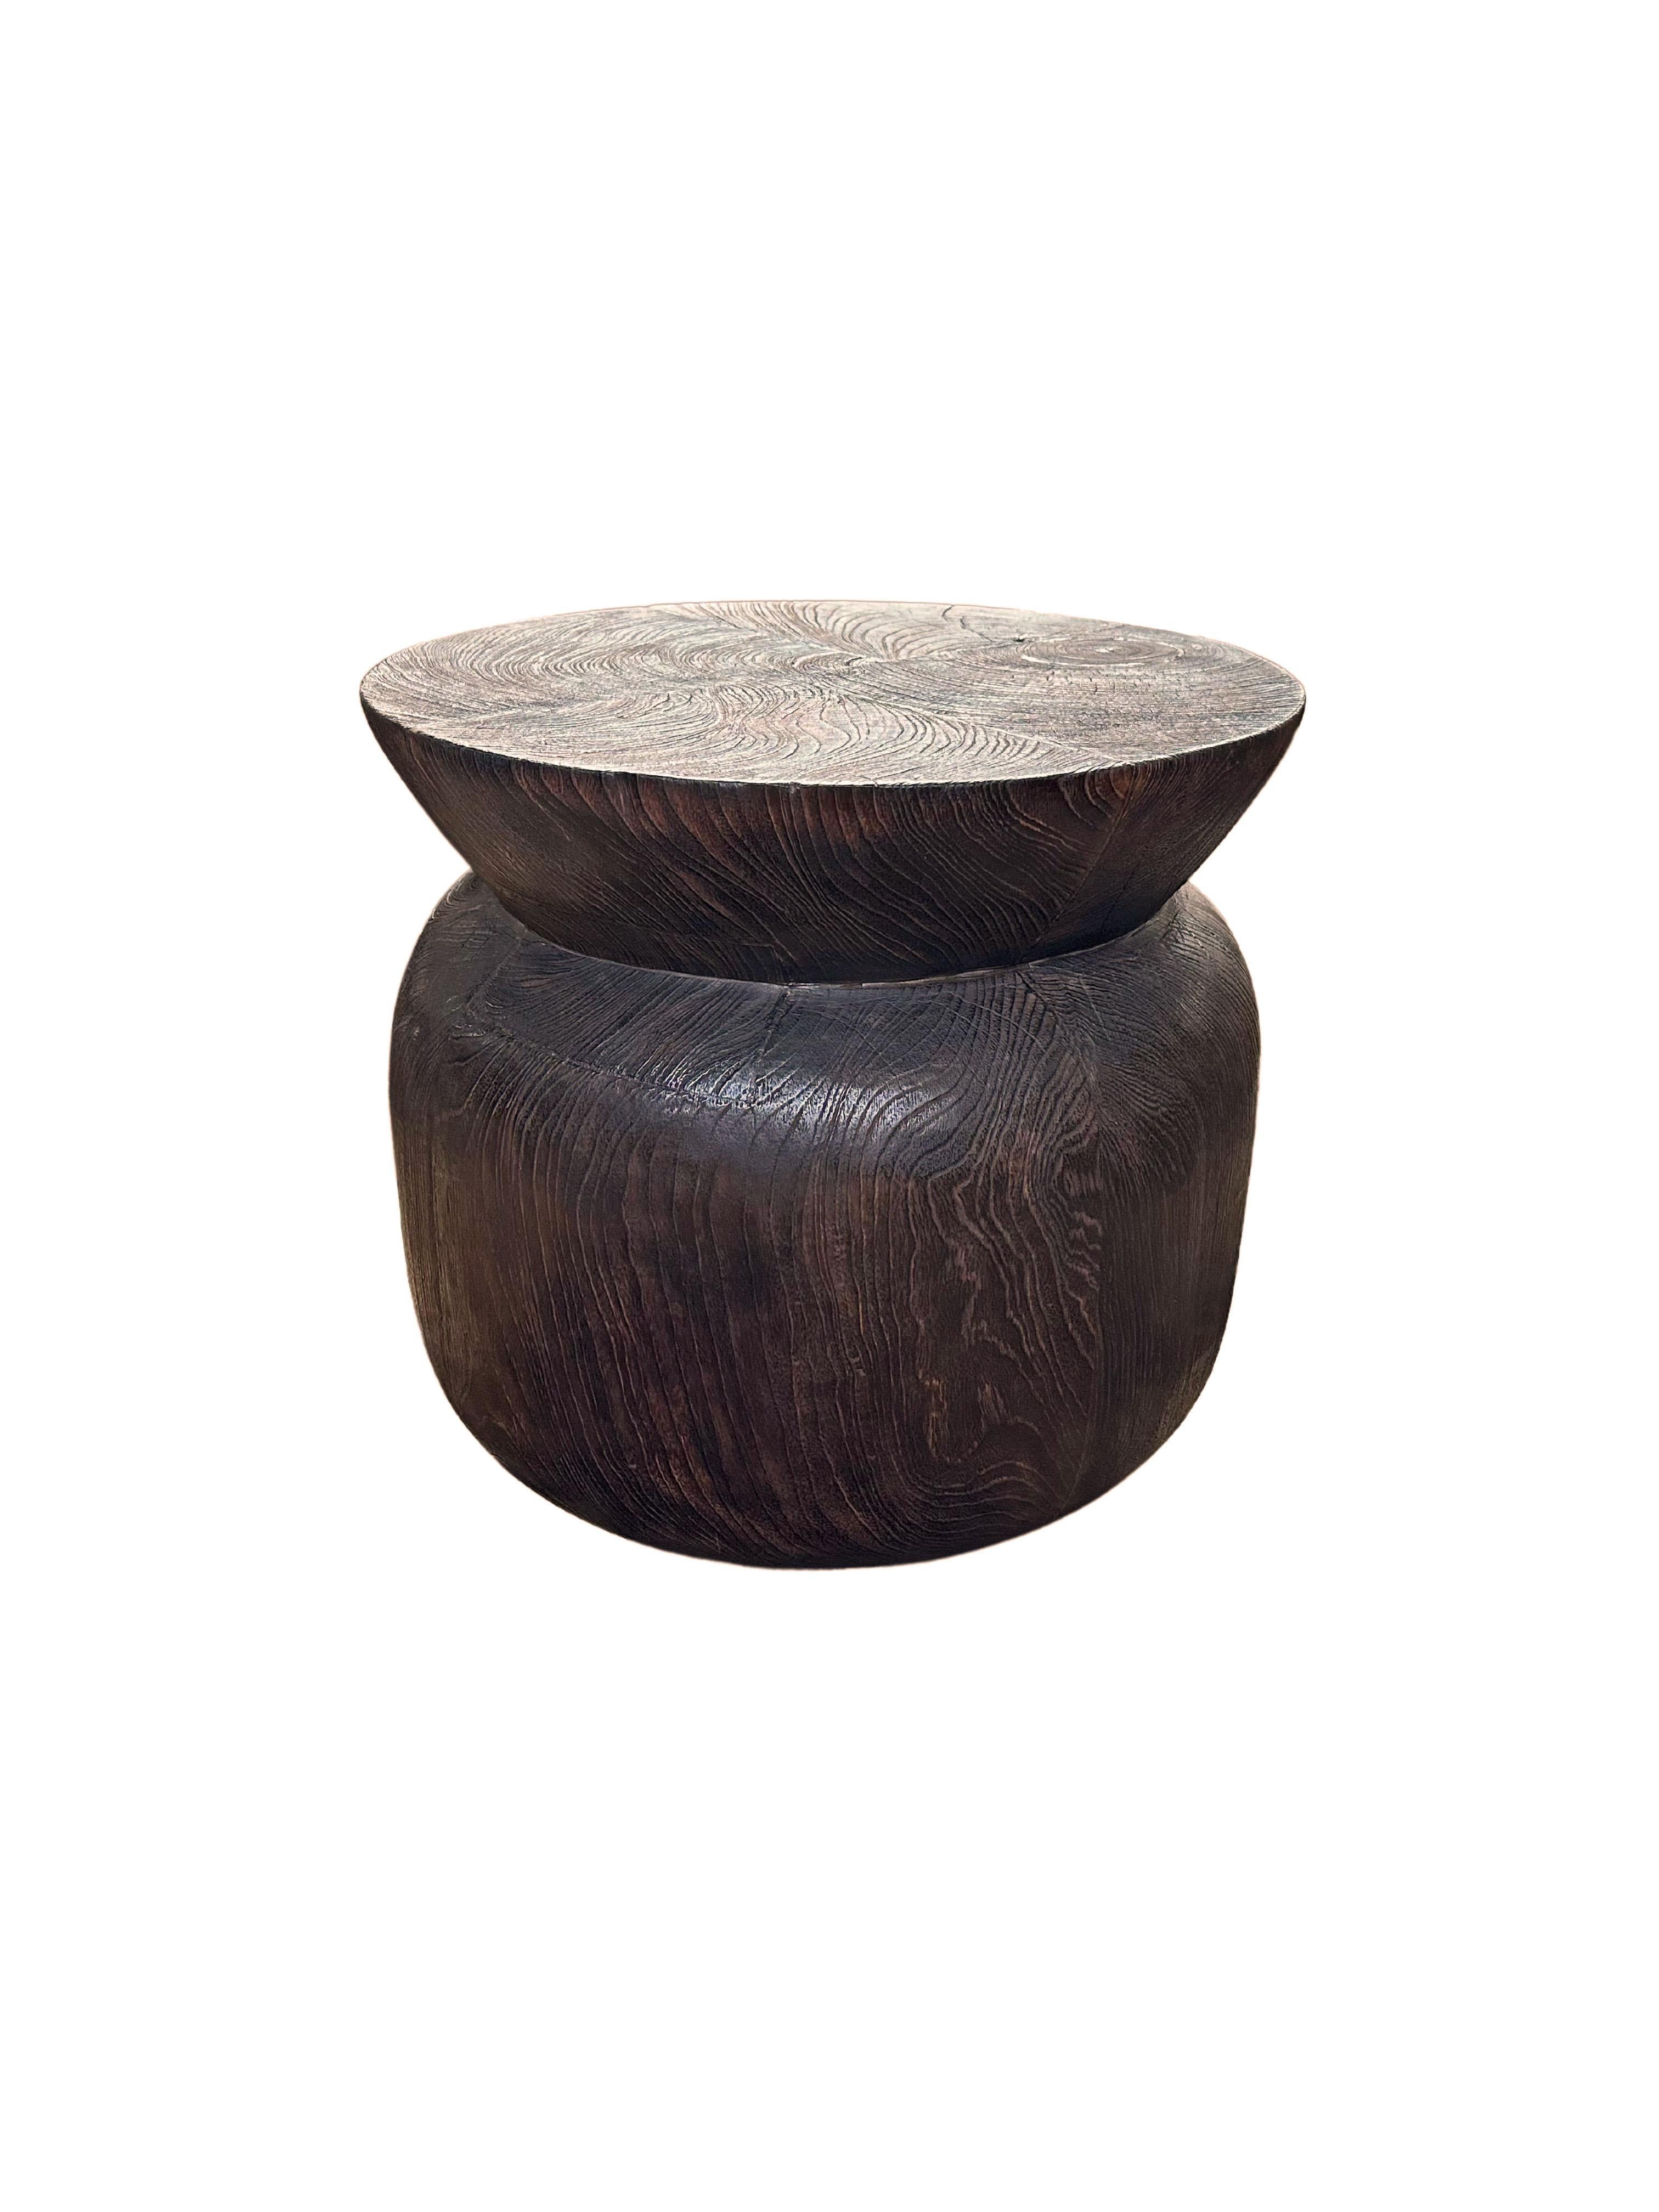 Indonesian Sculptural Round Teak Wood Side Table, Burnt Finish, Modern Organic For Sale